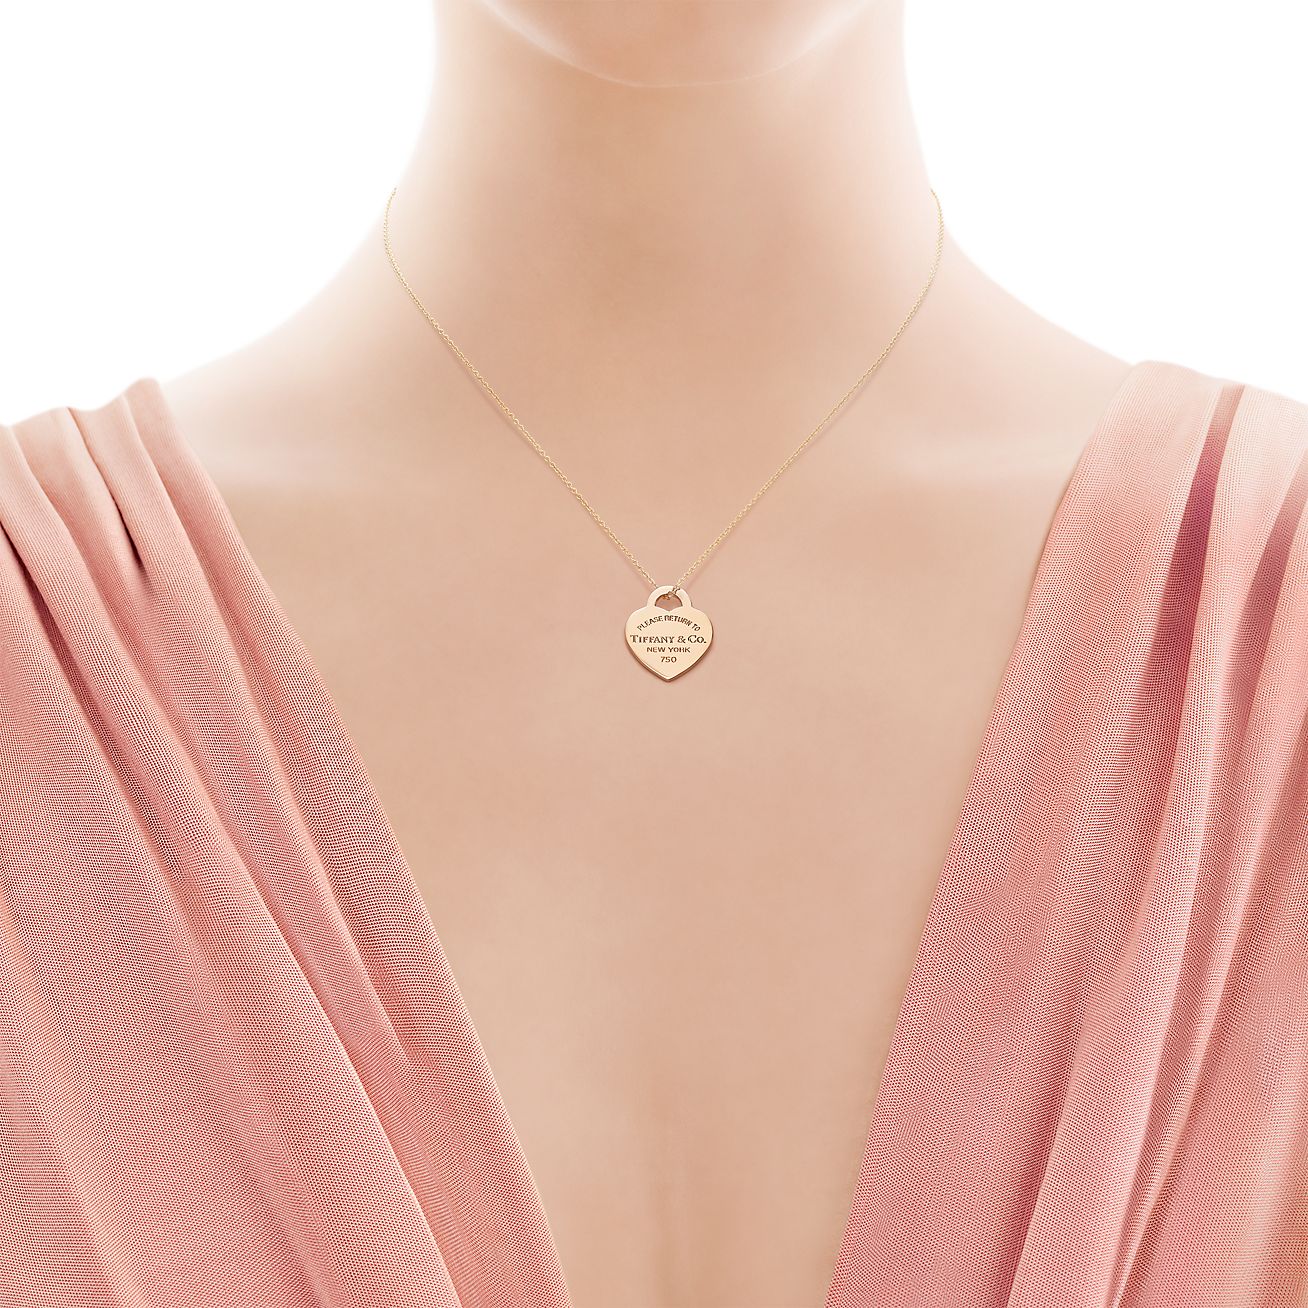 tiffany chain heart necklace